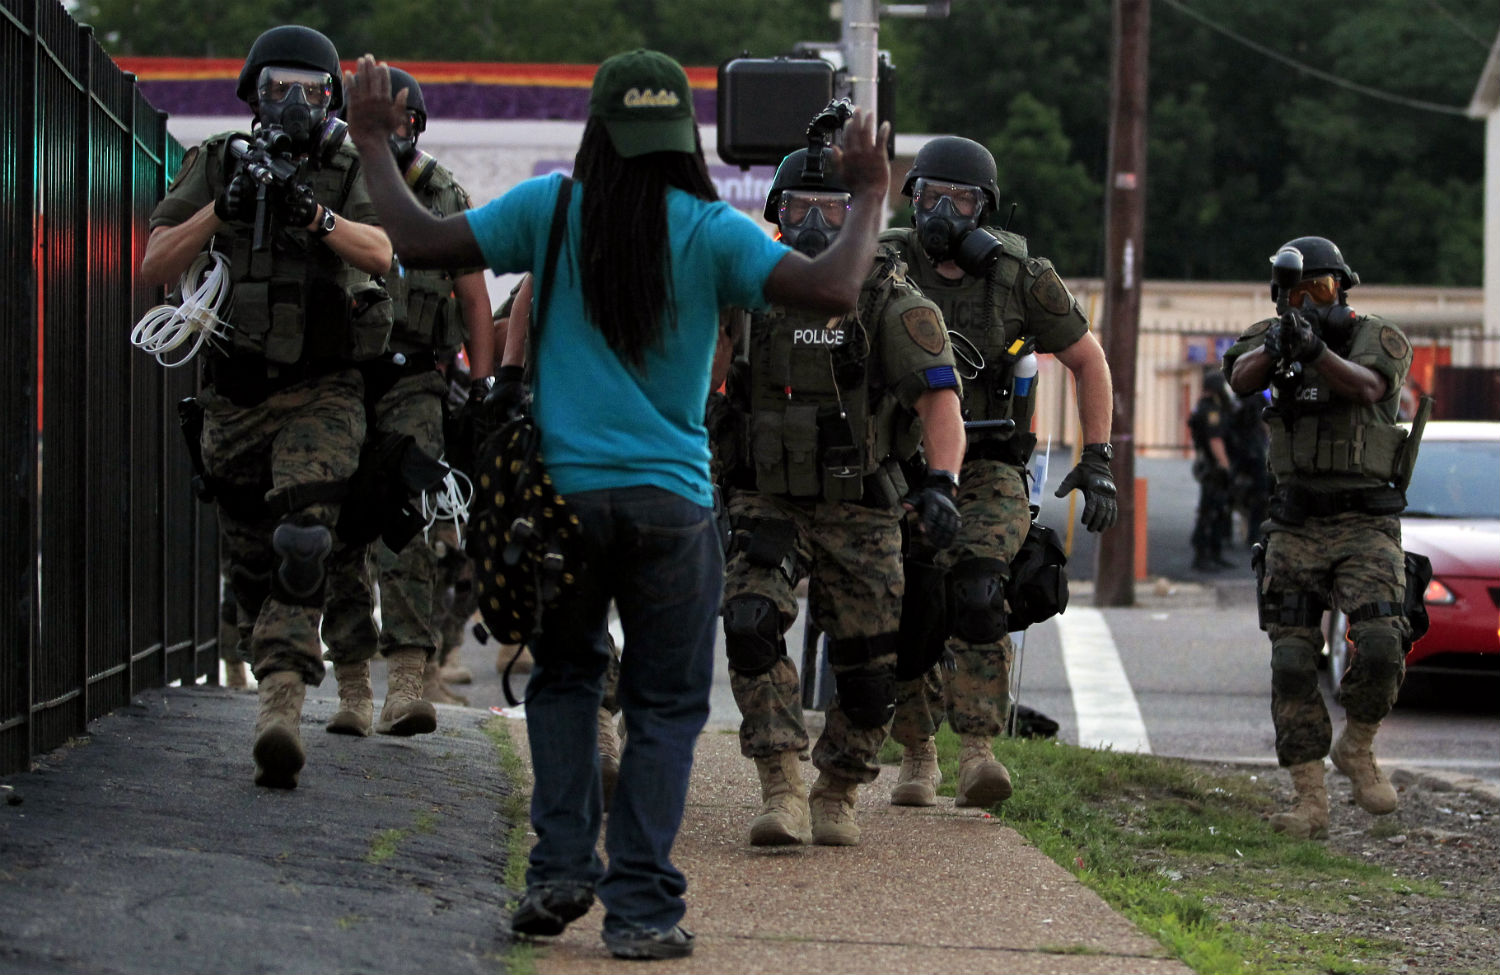 What’s Exceptional About Ferguson, Missouri?